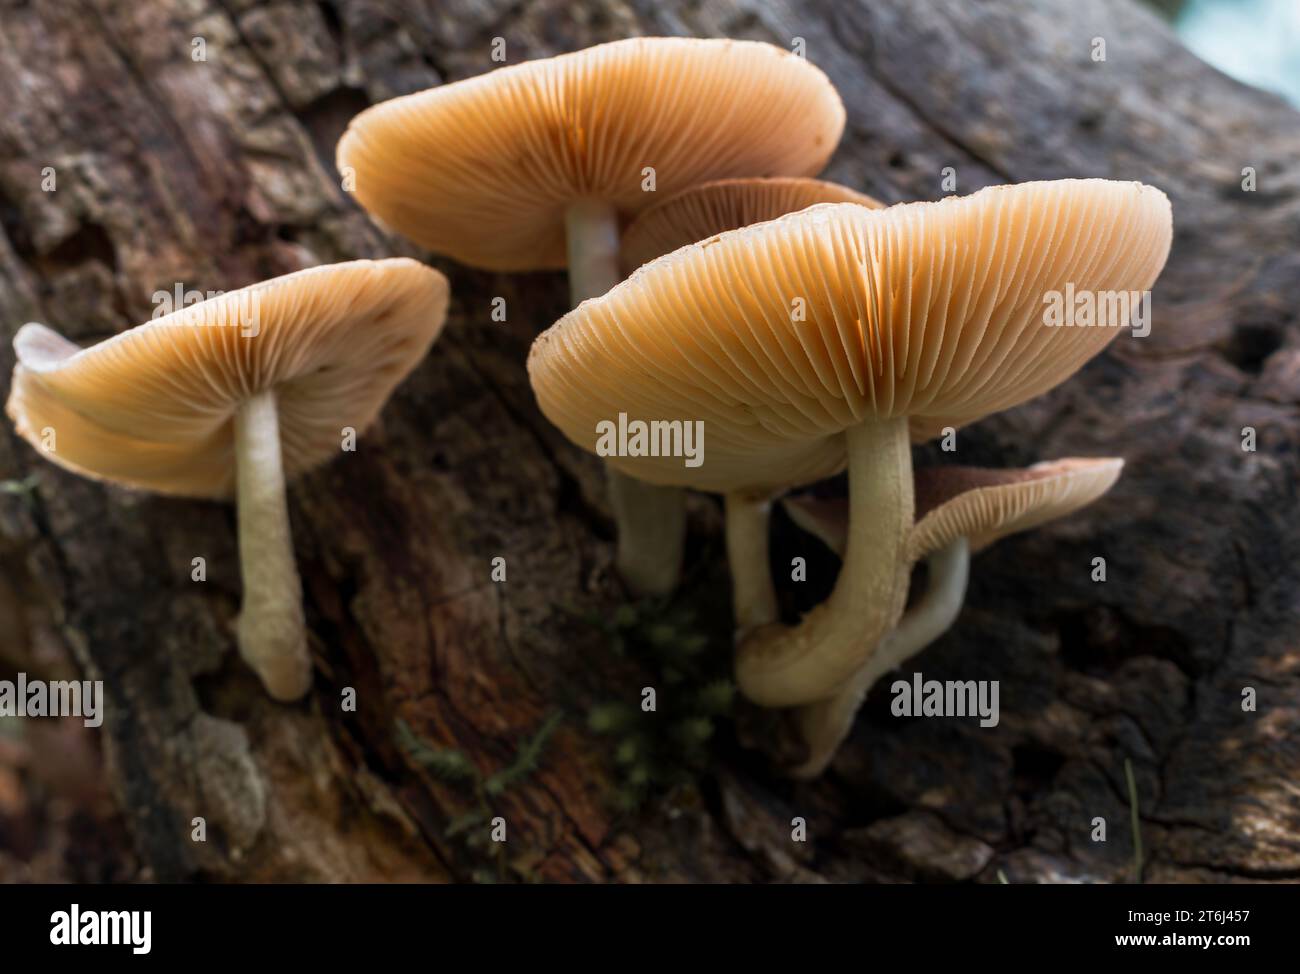 Common Stump Brittlestem Mushrooms viewed from underneath Stock Photo